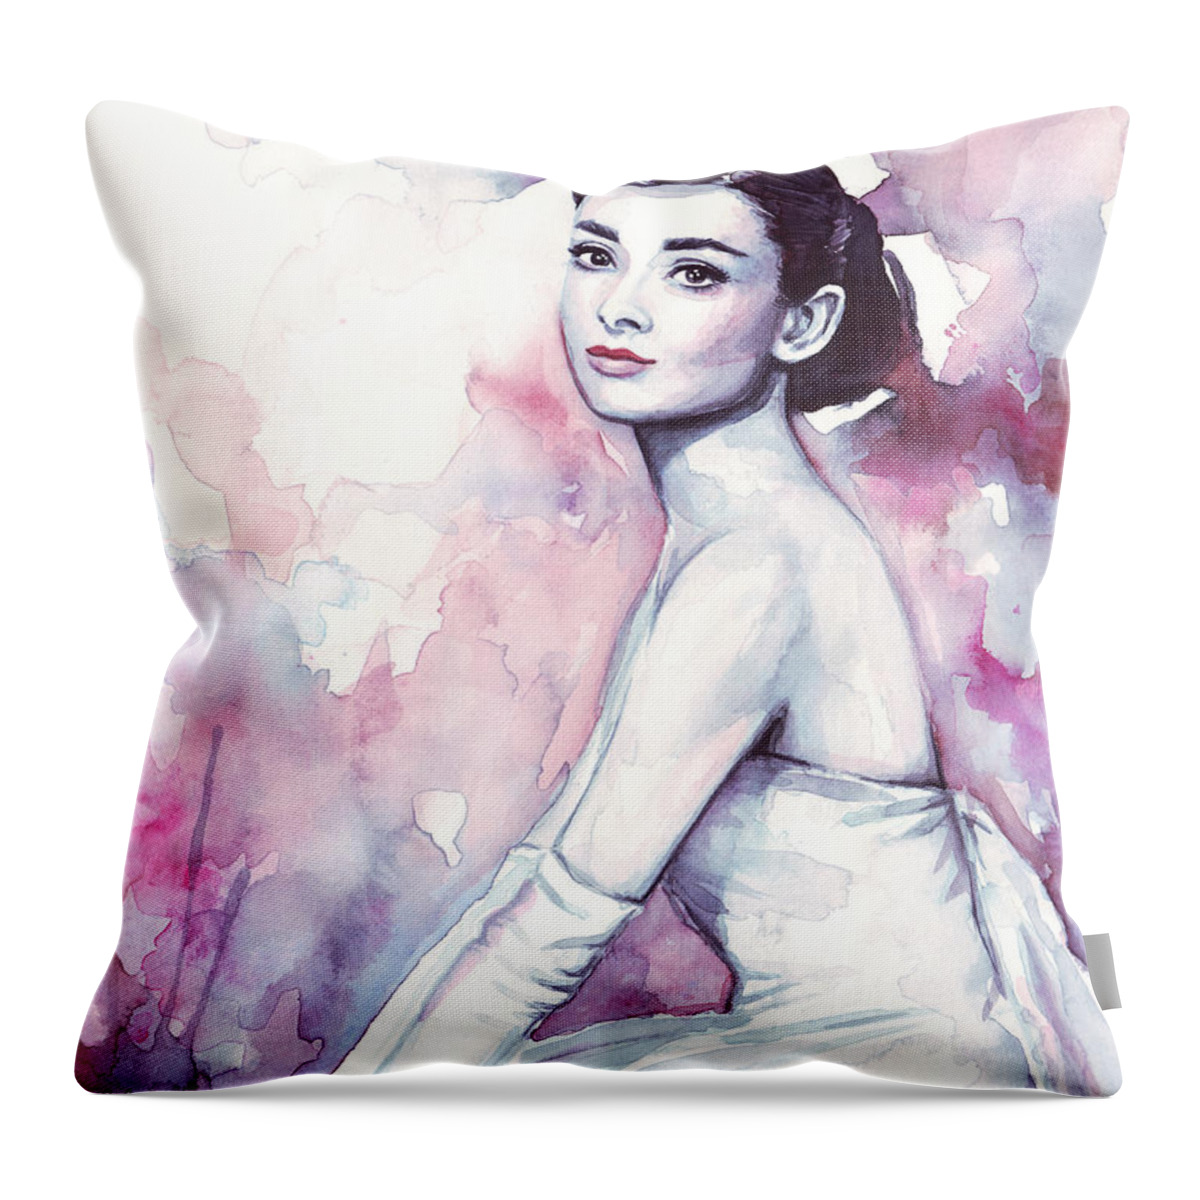 Fashion Watercolor Throw Pillow featuring the painting Audrey Hepburn Portrait by Olga Shvartsur